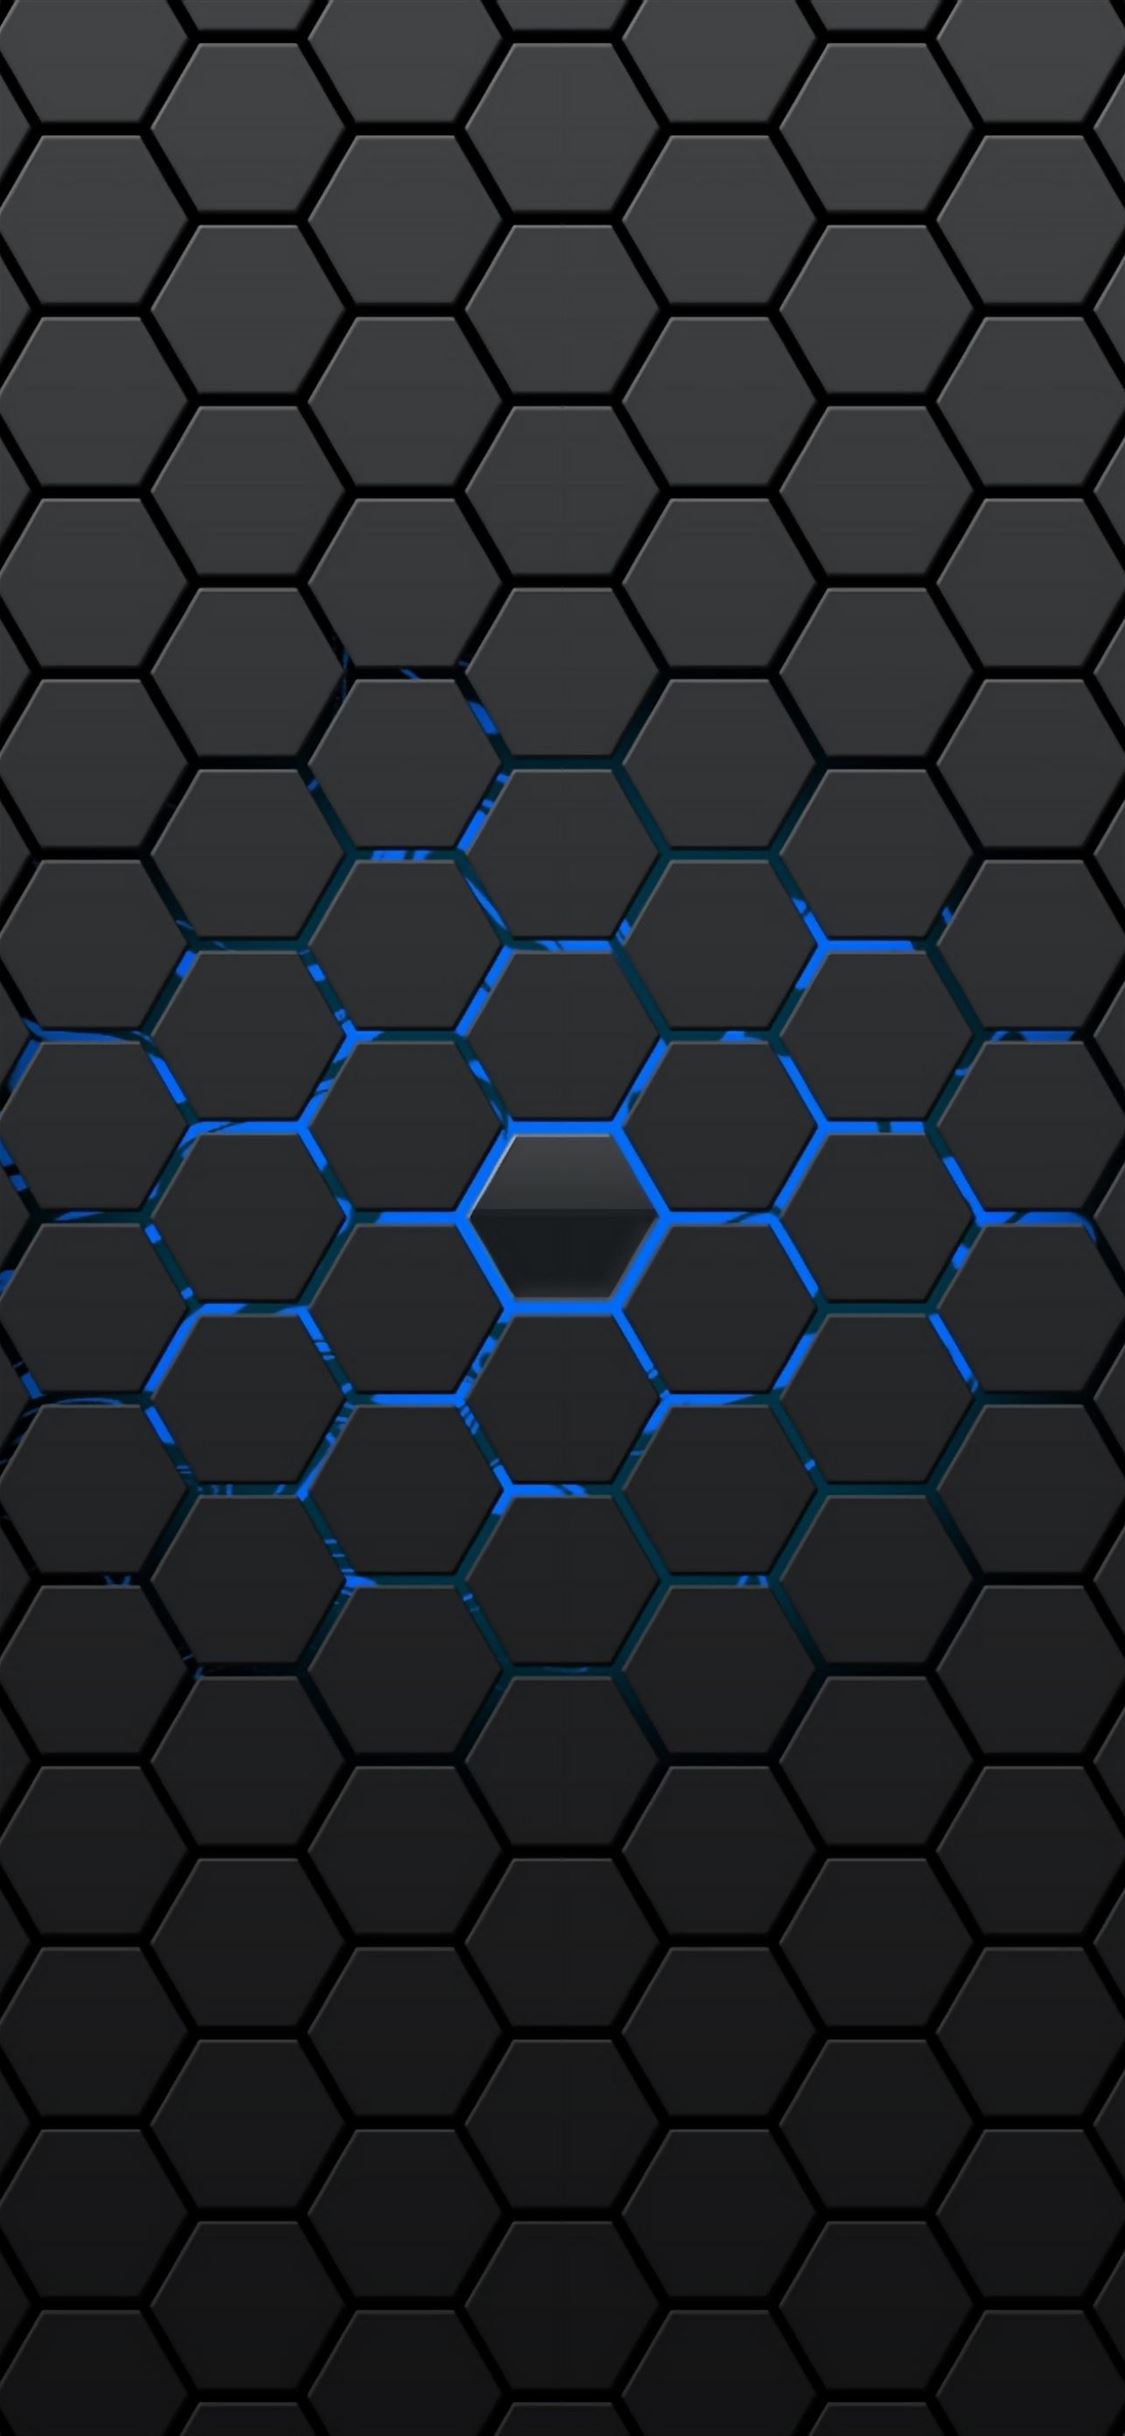 Honeycomb Pattern iPhone wallpaper 